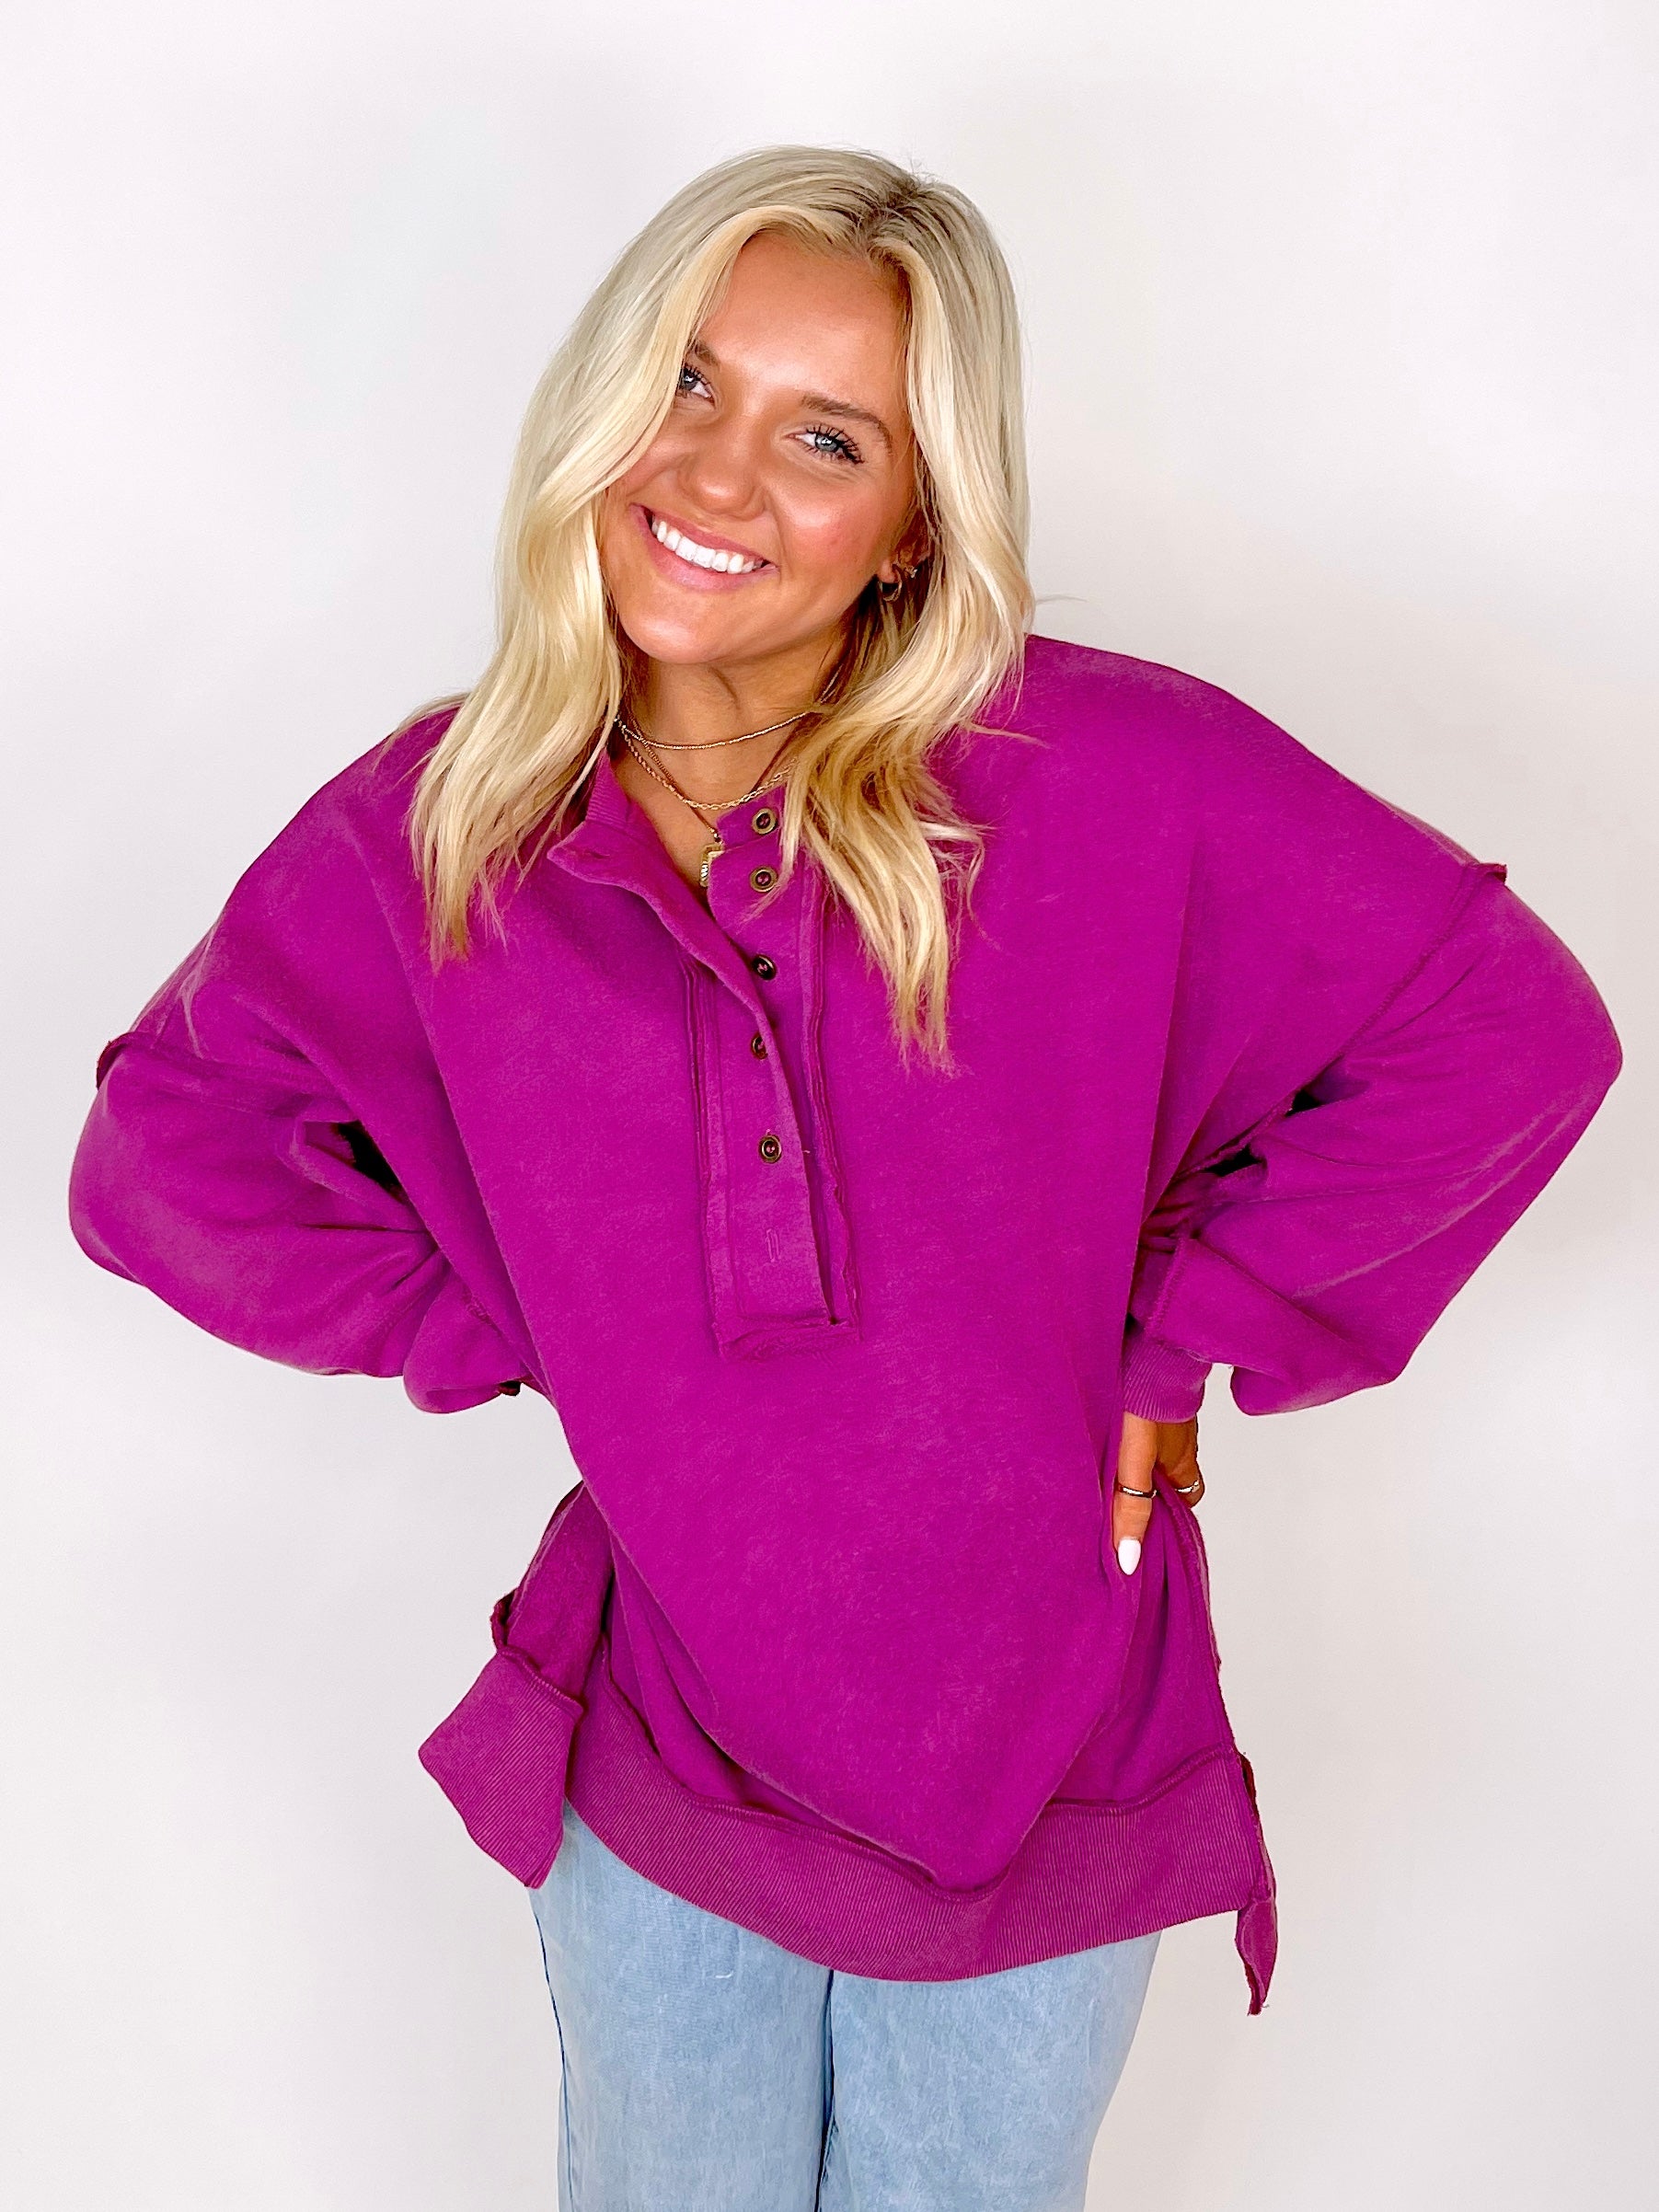 The Maren Sweatshirt-Sweatshirt-Peach Love California-The Village Shoppe, Women’s Fashion Boutique, Shop Online and In Store - Located in Muscle Shoals, AL.